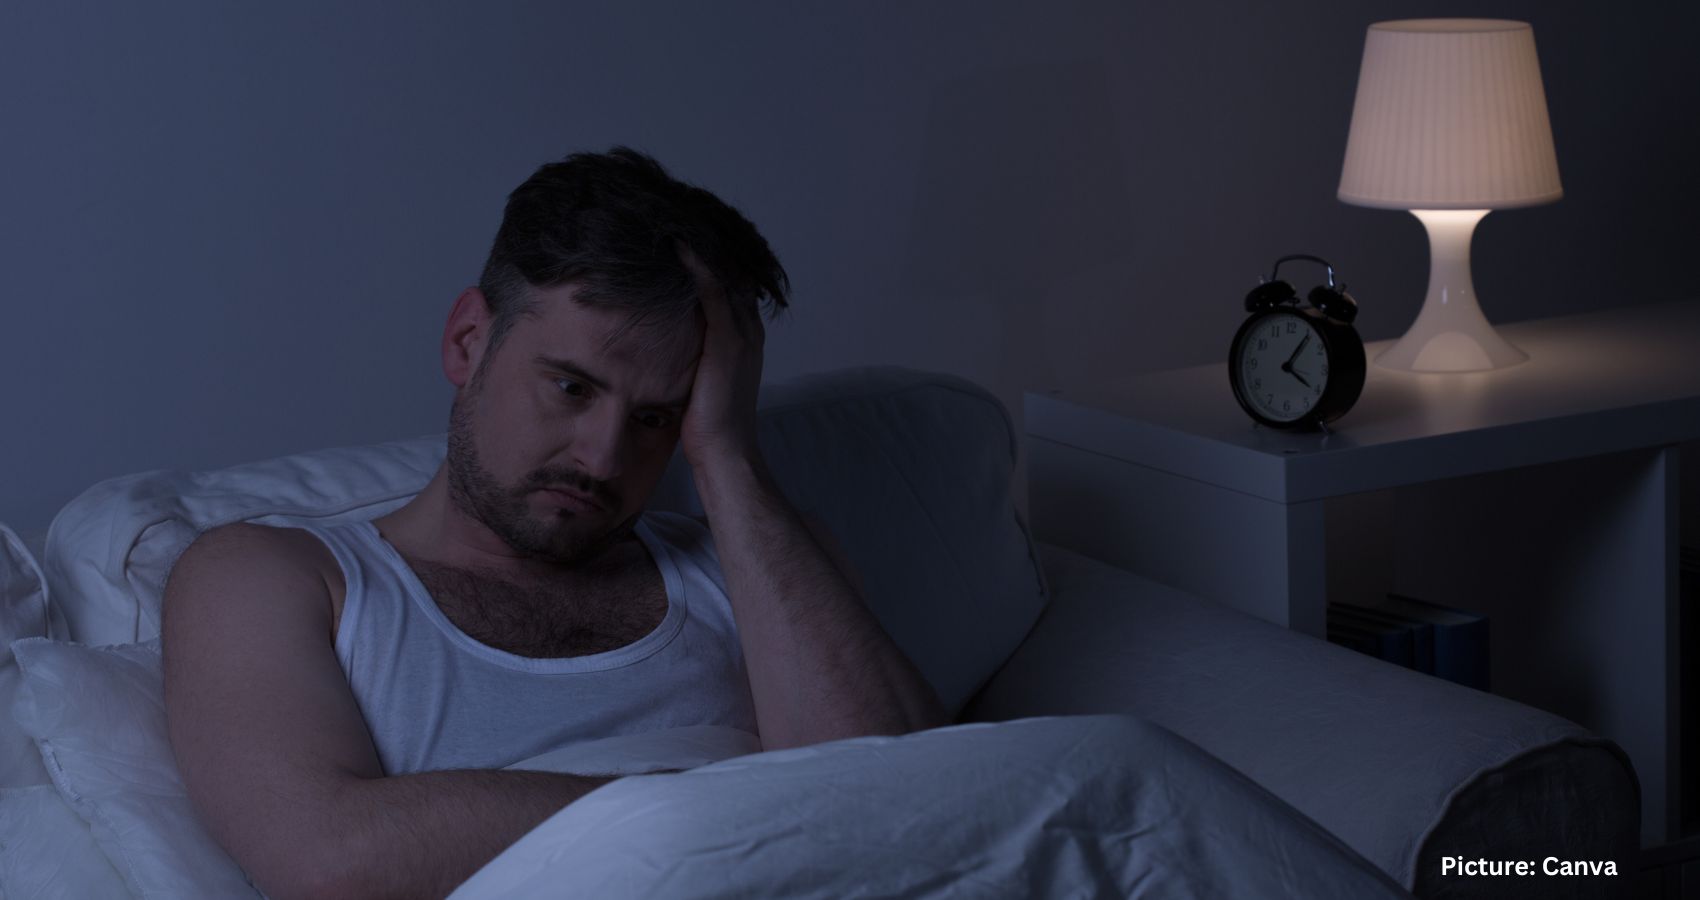 Irregular Sleep Patterns Linked to Higher Risk of Type 2 Diabetes